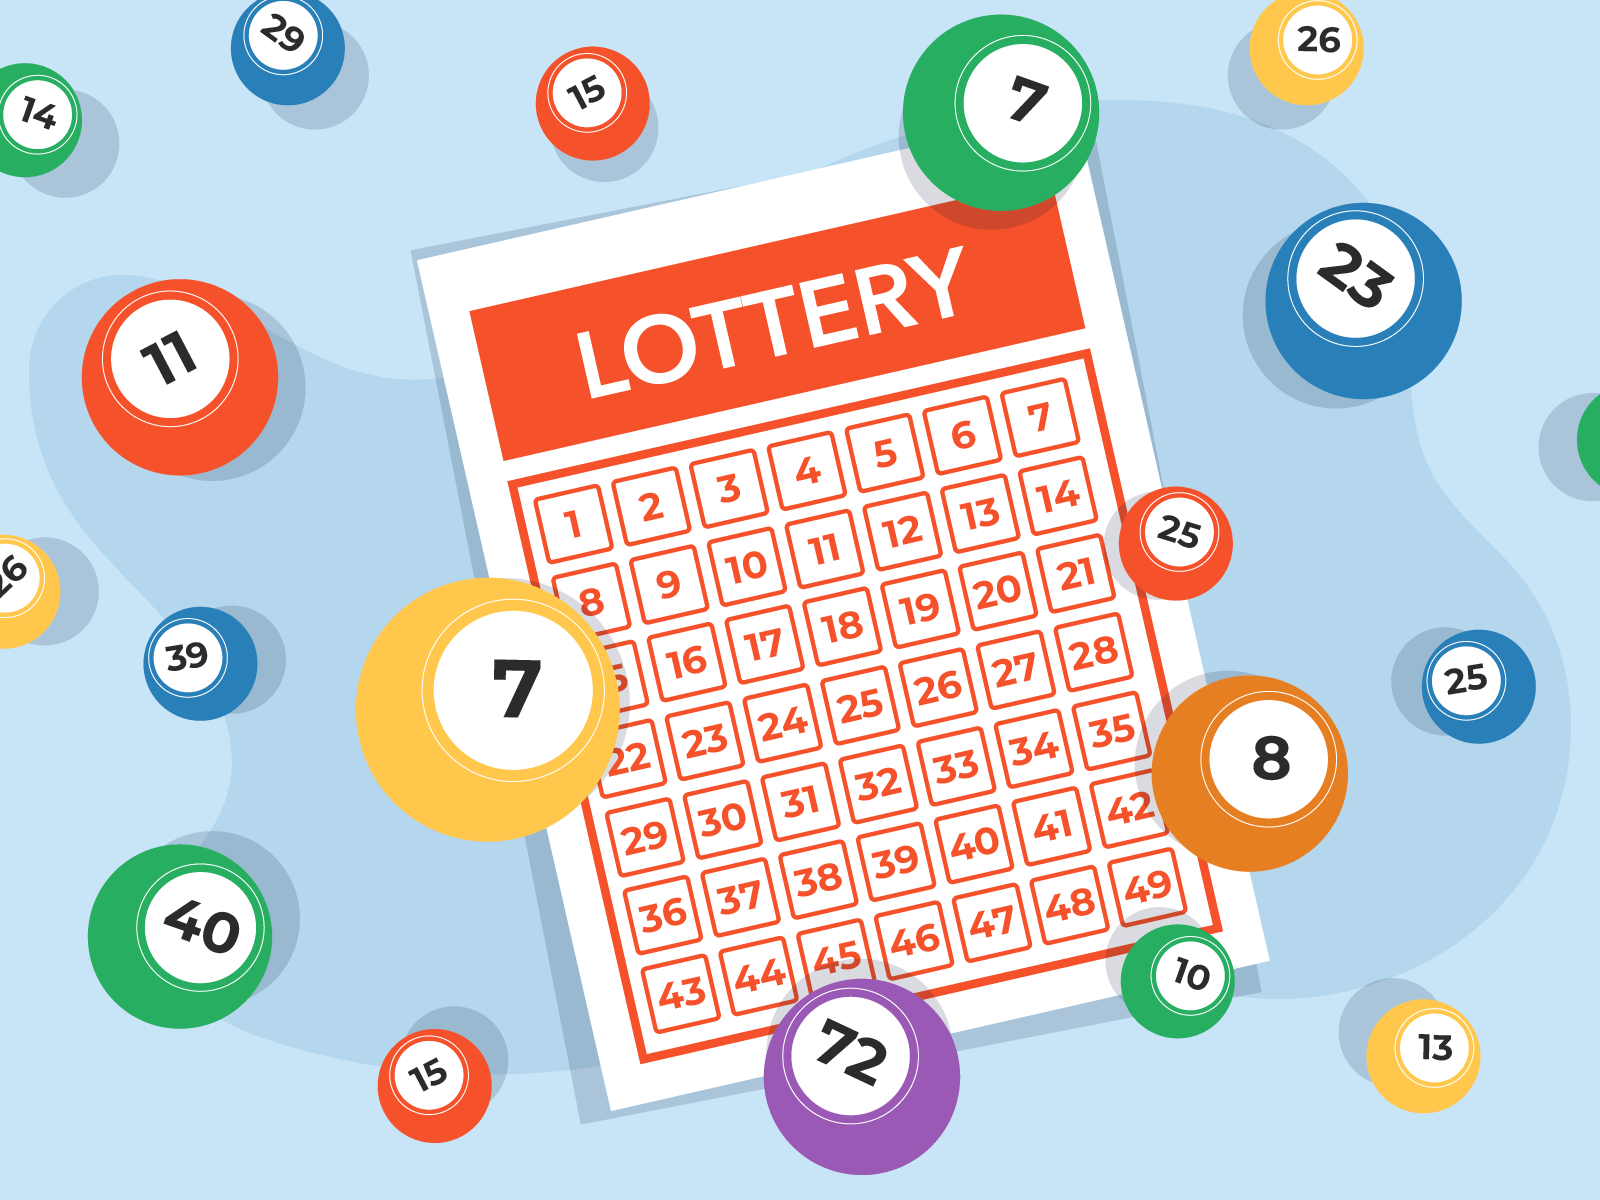 What Makes KayaMoola a Good Option for Lotteries?